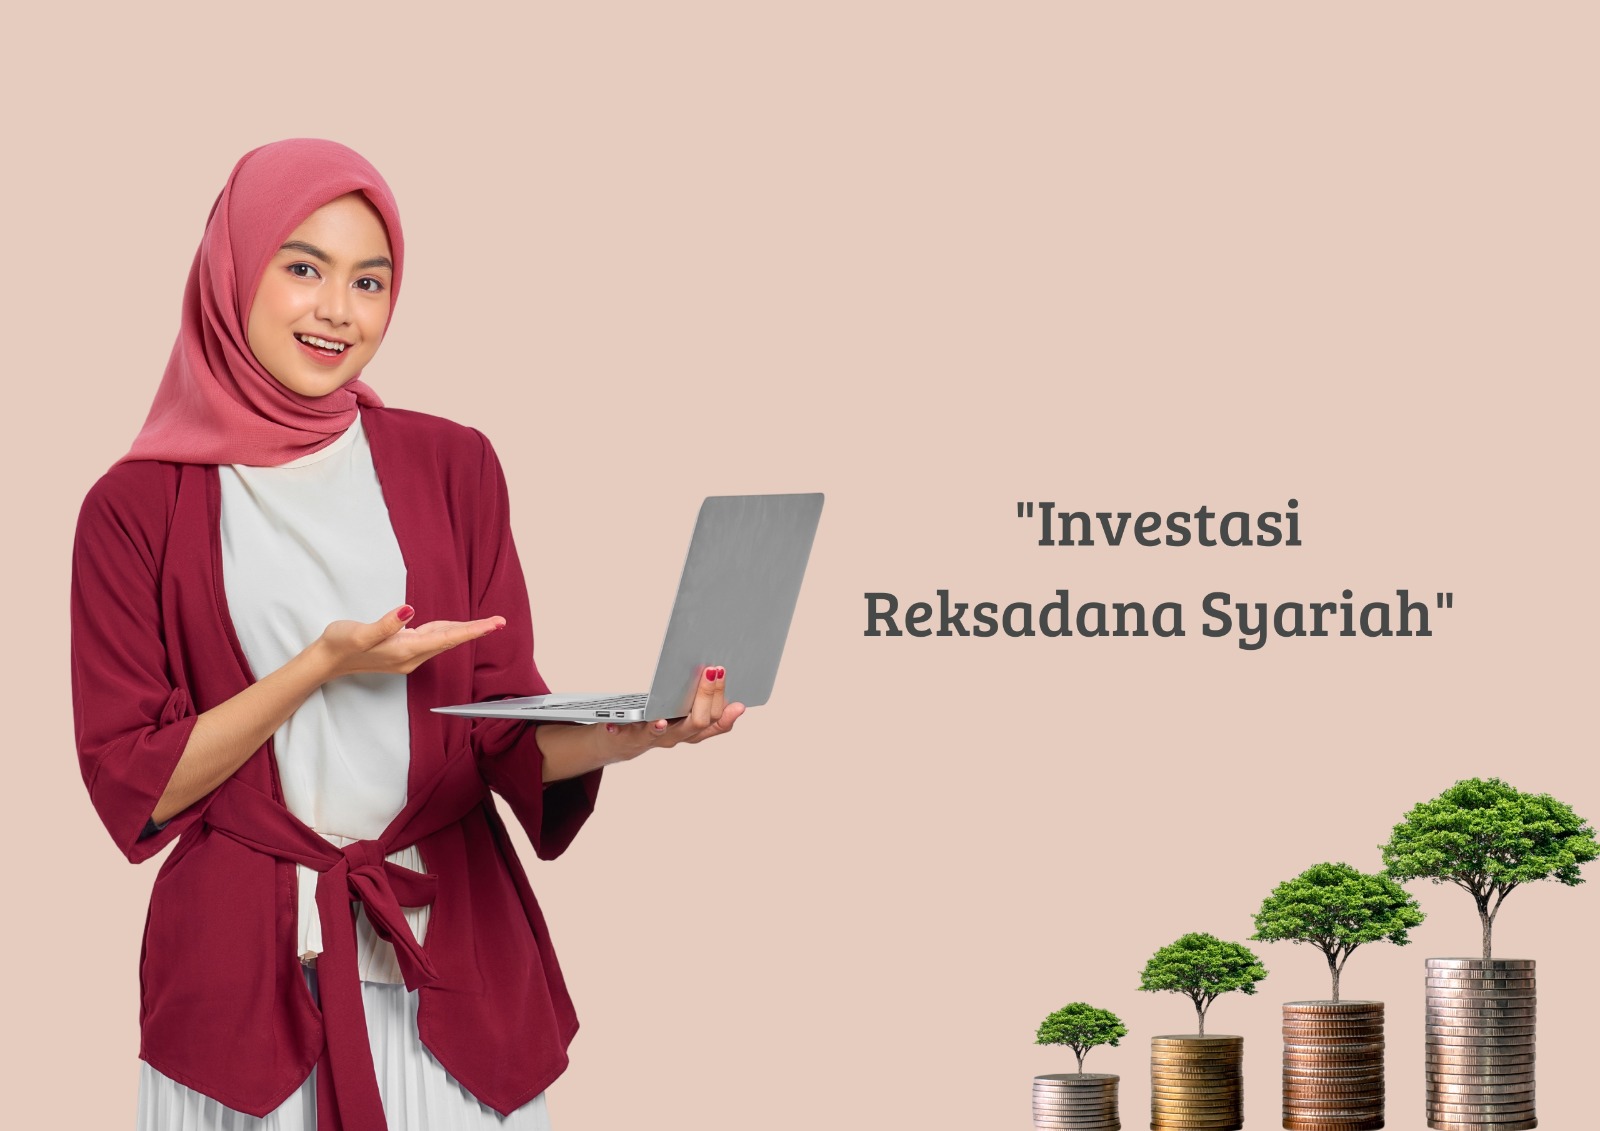 6 Cara Investasi di Reksadana Syariah dan 7 Keuntungan Finansial Sesuai Prinsip Keuangan Islam